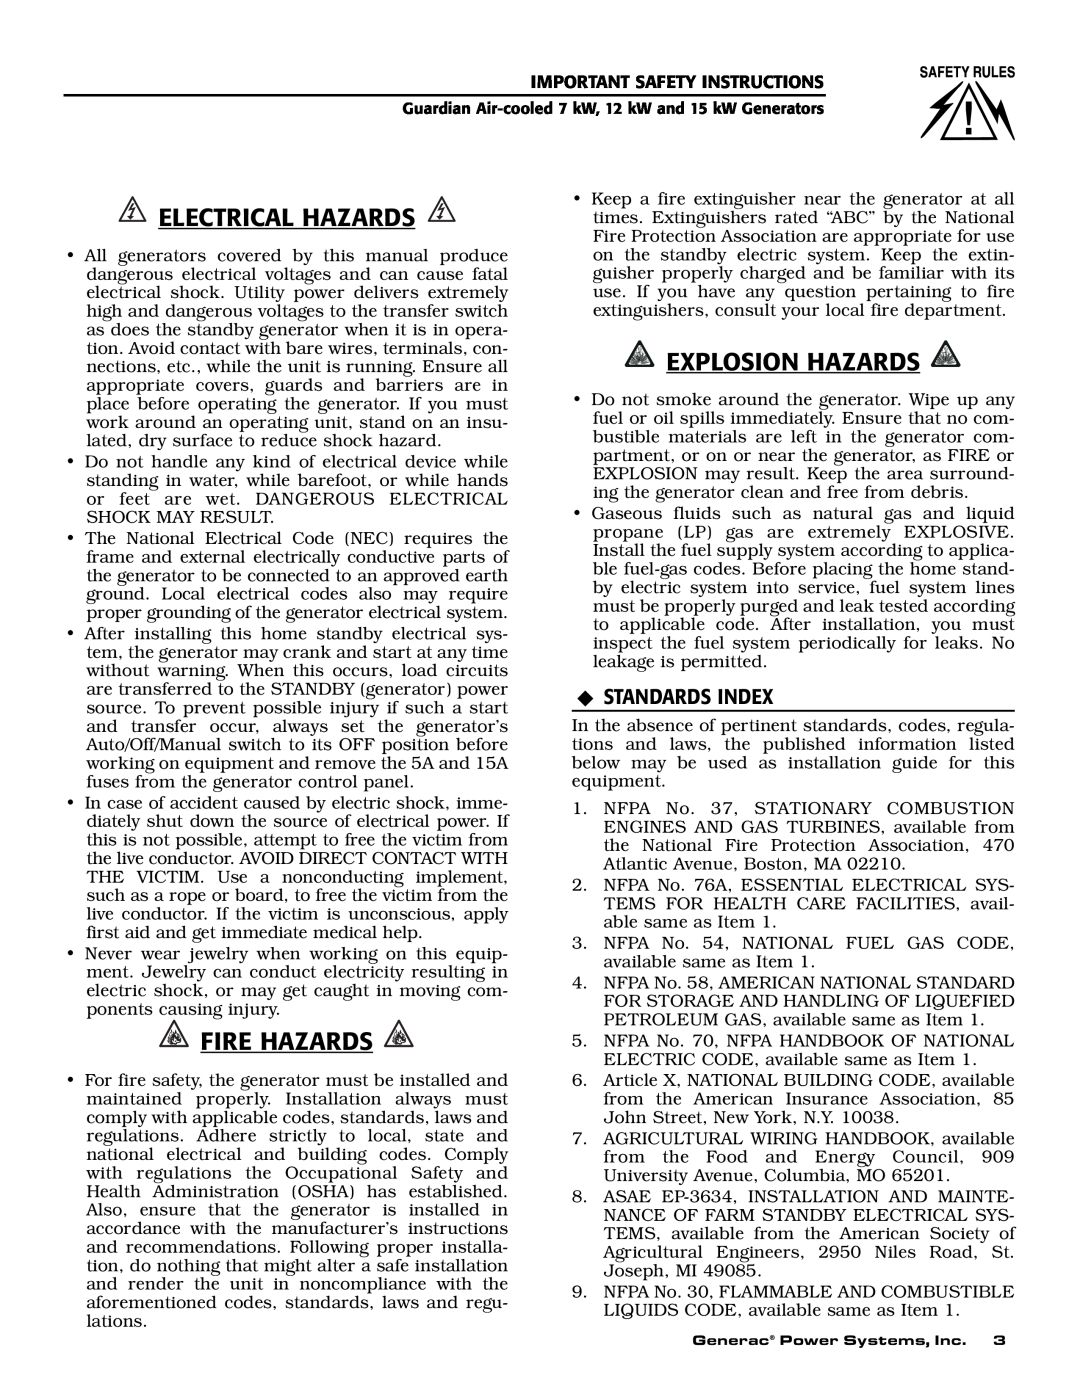 Generac 04389-1, 04456-1, 04390-1 owner manual Electrical Hazards, Fire Hazards, Explosion Hazards, ‹Standards Index 